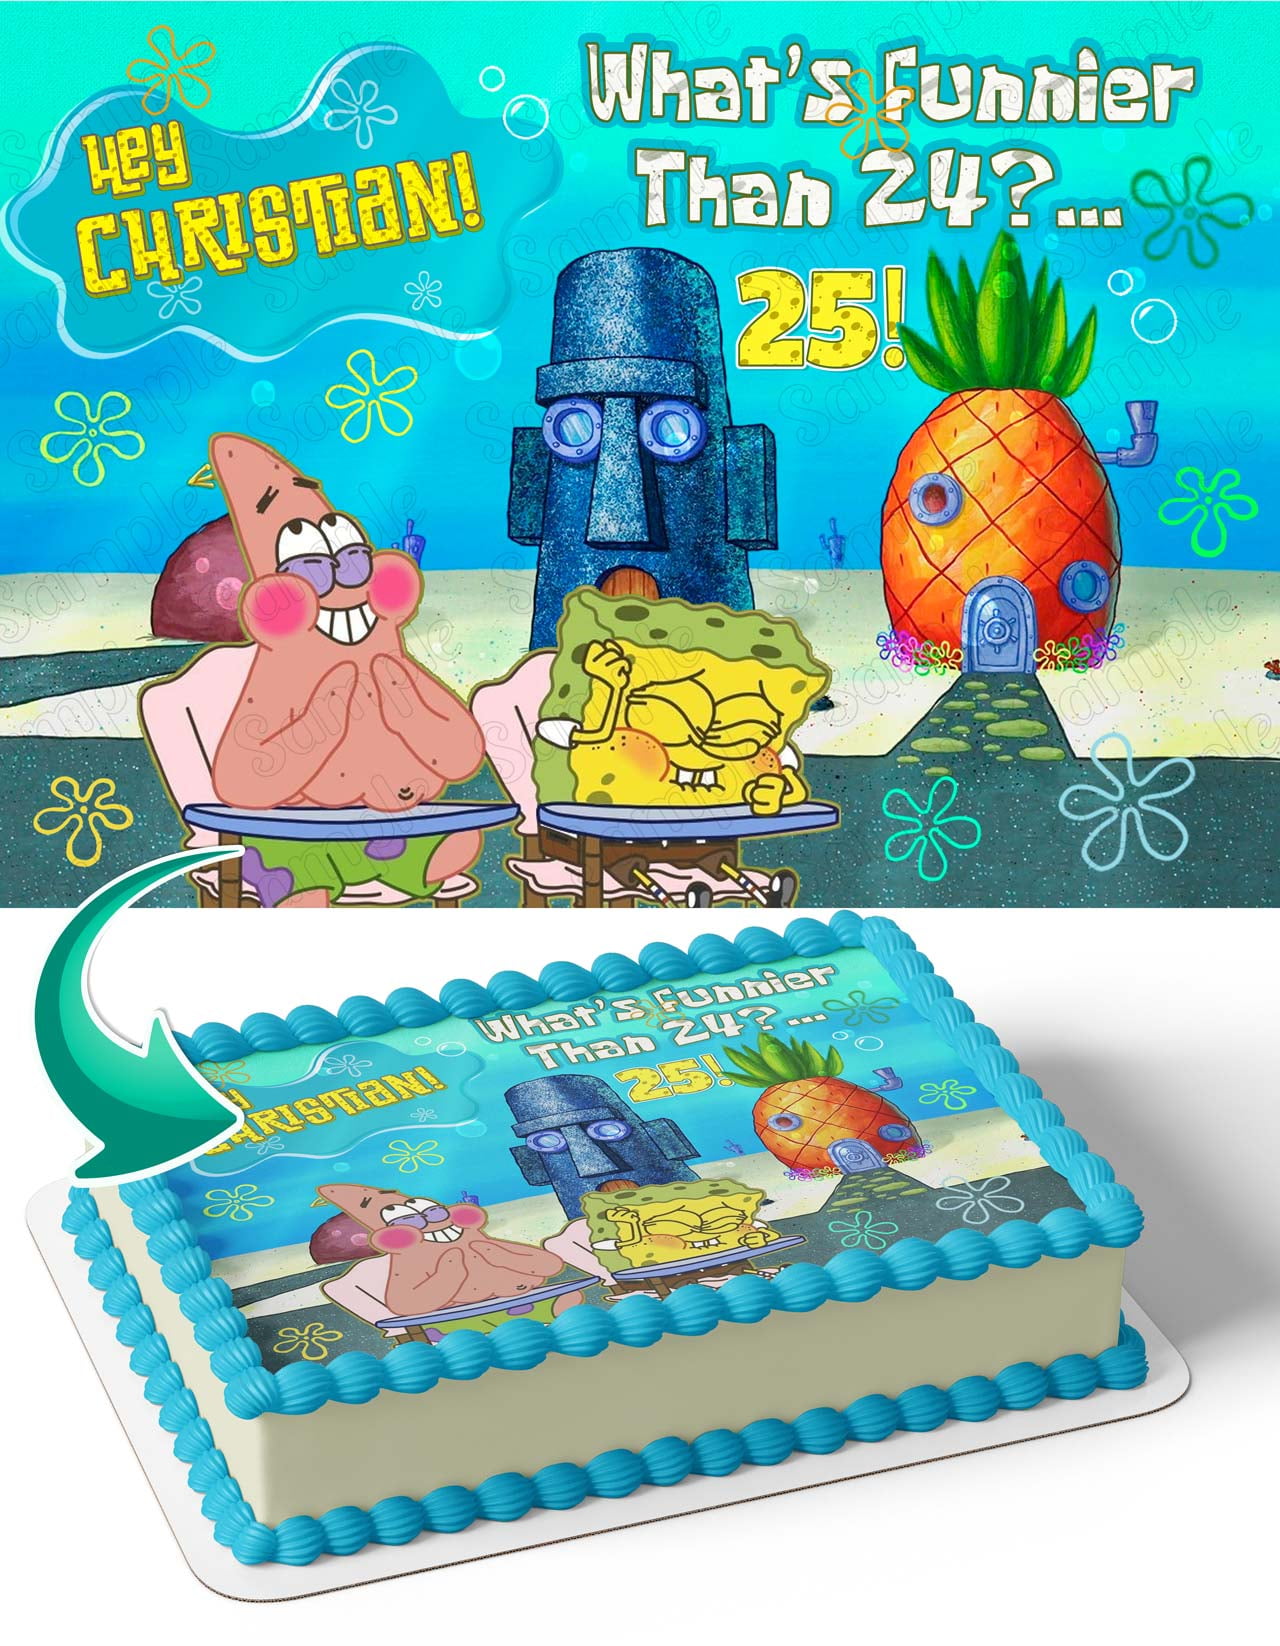 Spongebob Birthday Edible Cake Topper Image 1/4 sheet ABPID22154